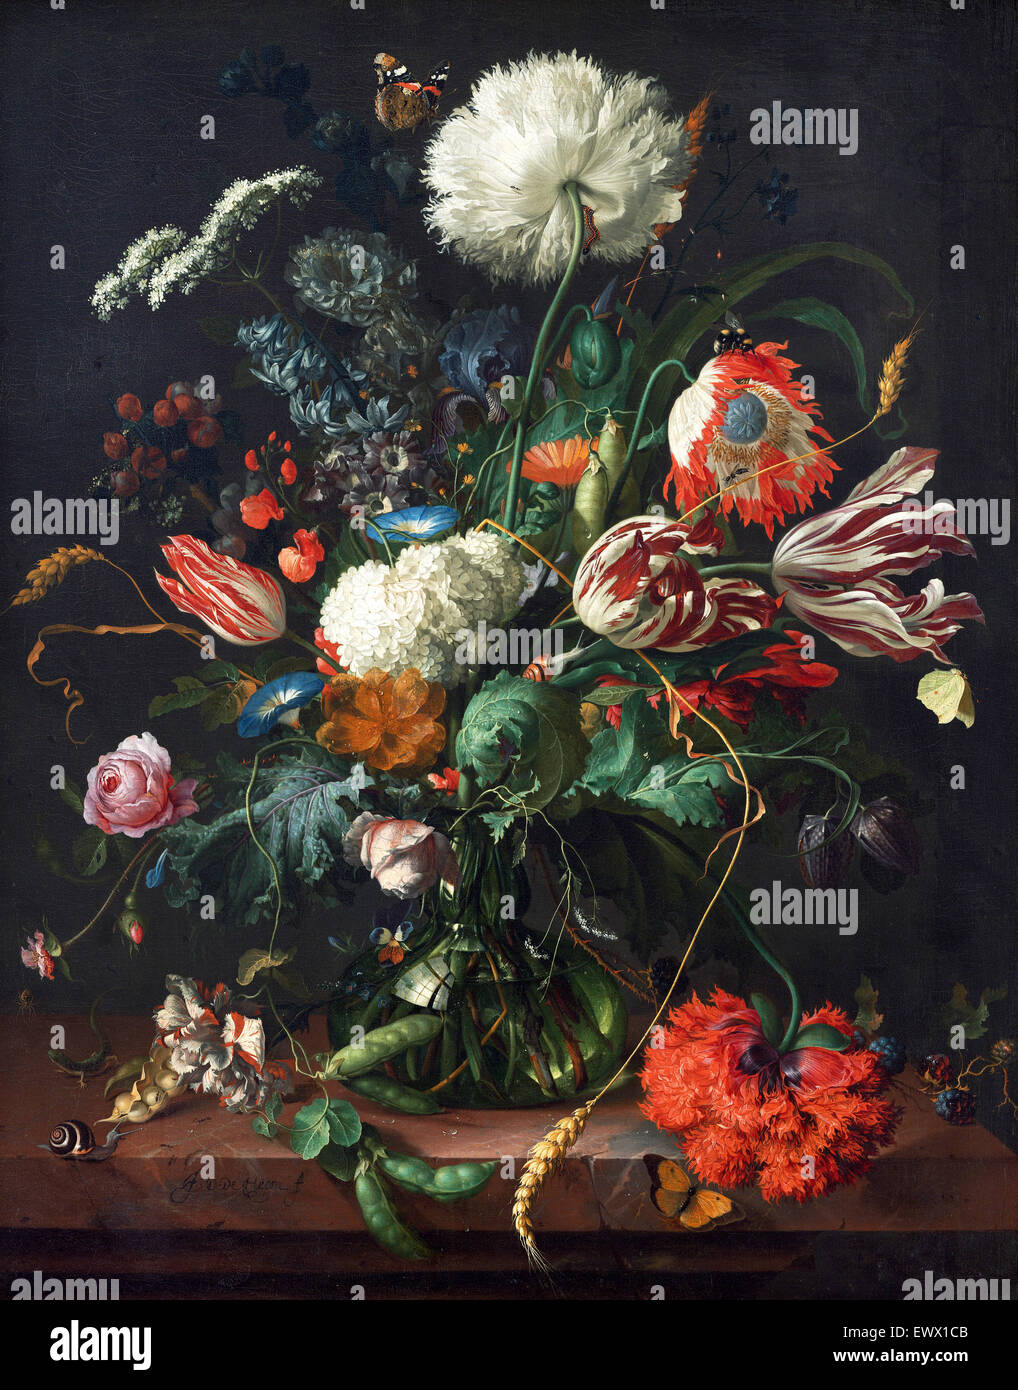 Jan Davidsz. de Heem, Vase of Flowers. Circa 1660. Oil on canvas. National Gallery of Art, Washington, D.C., USA. Stock Photo